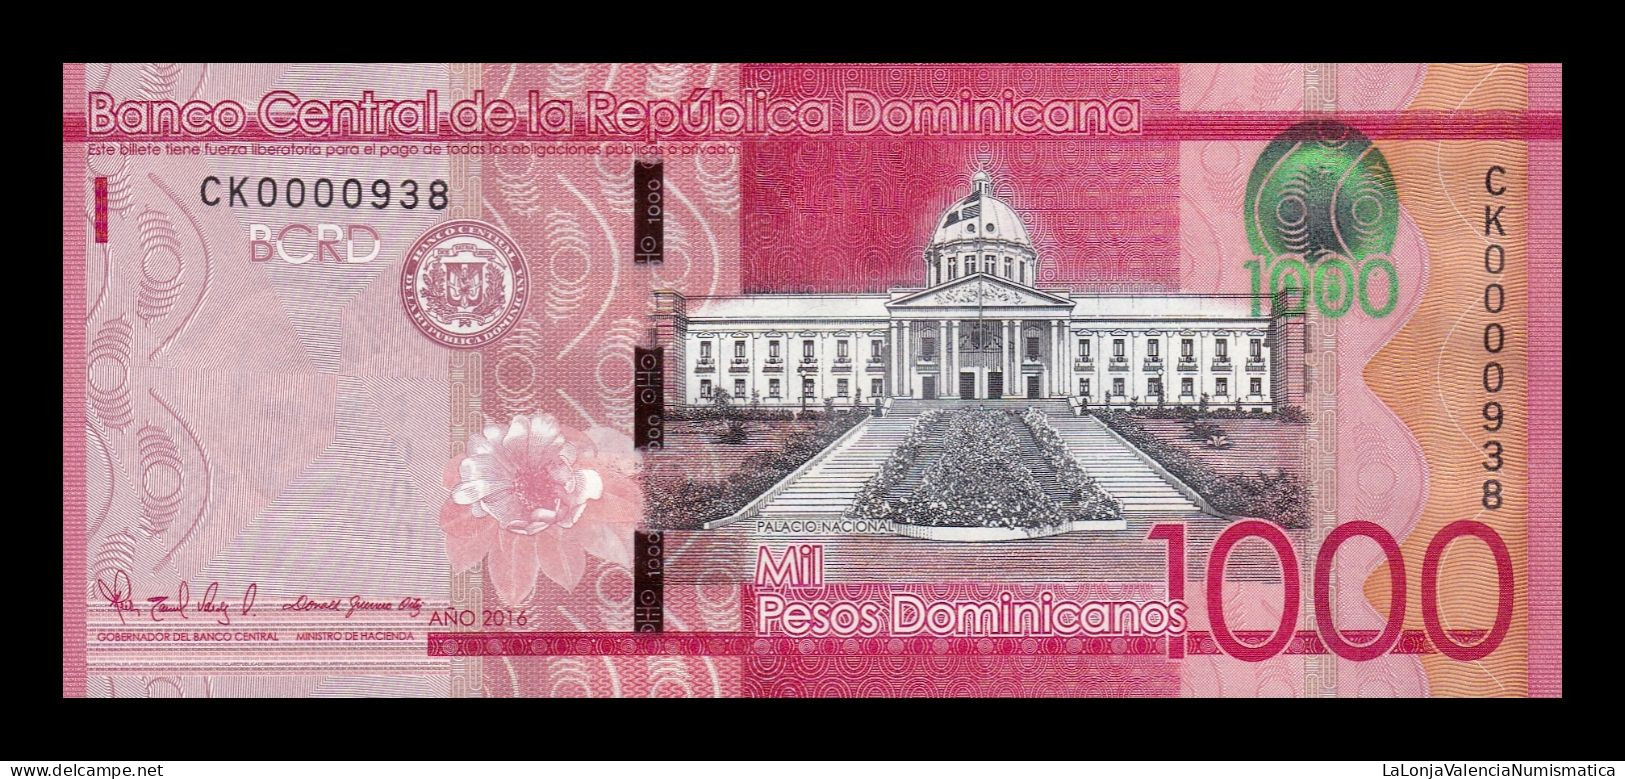 República Dominicana 1000 Pesos Dominicanos 2016 Pick 193c Low Serial 938 Sc Unc - Dominicaine